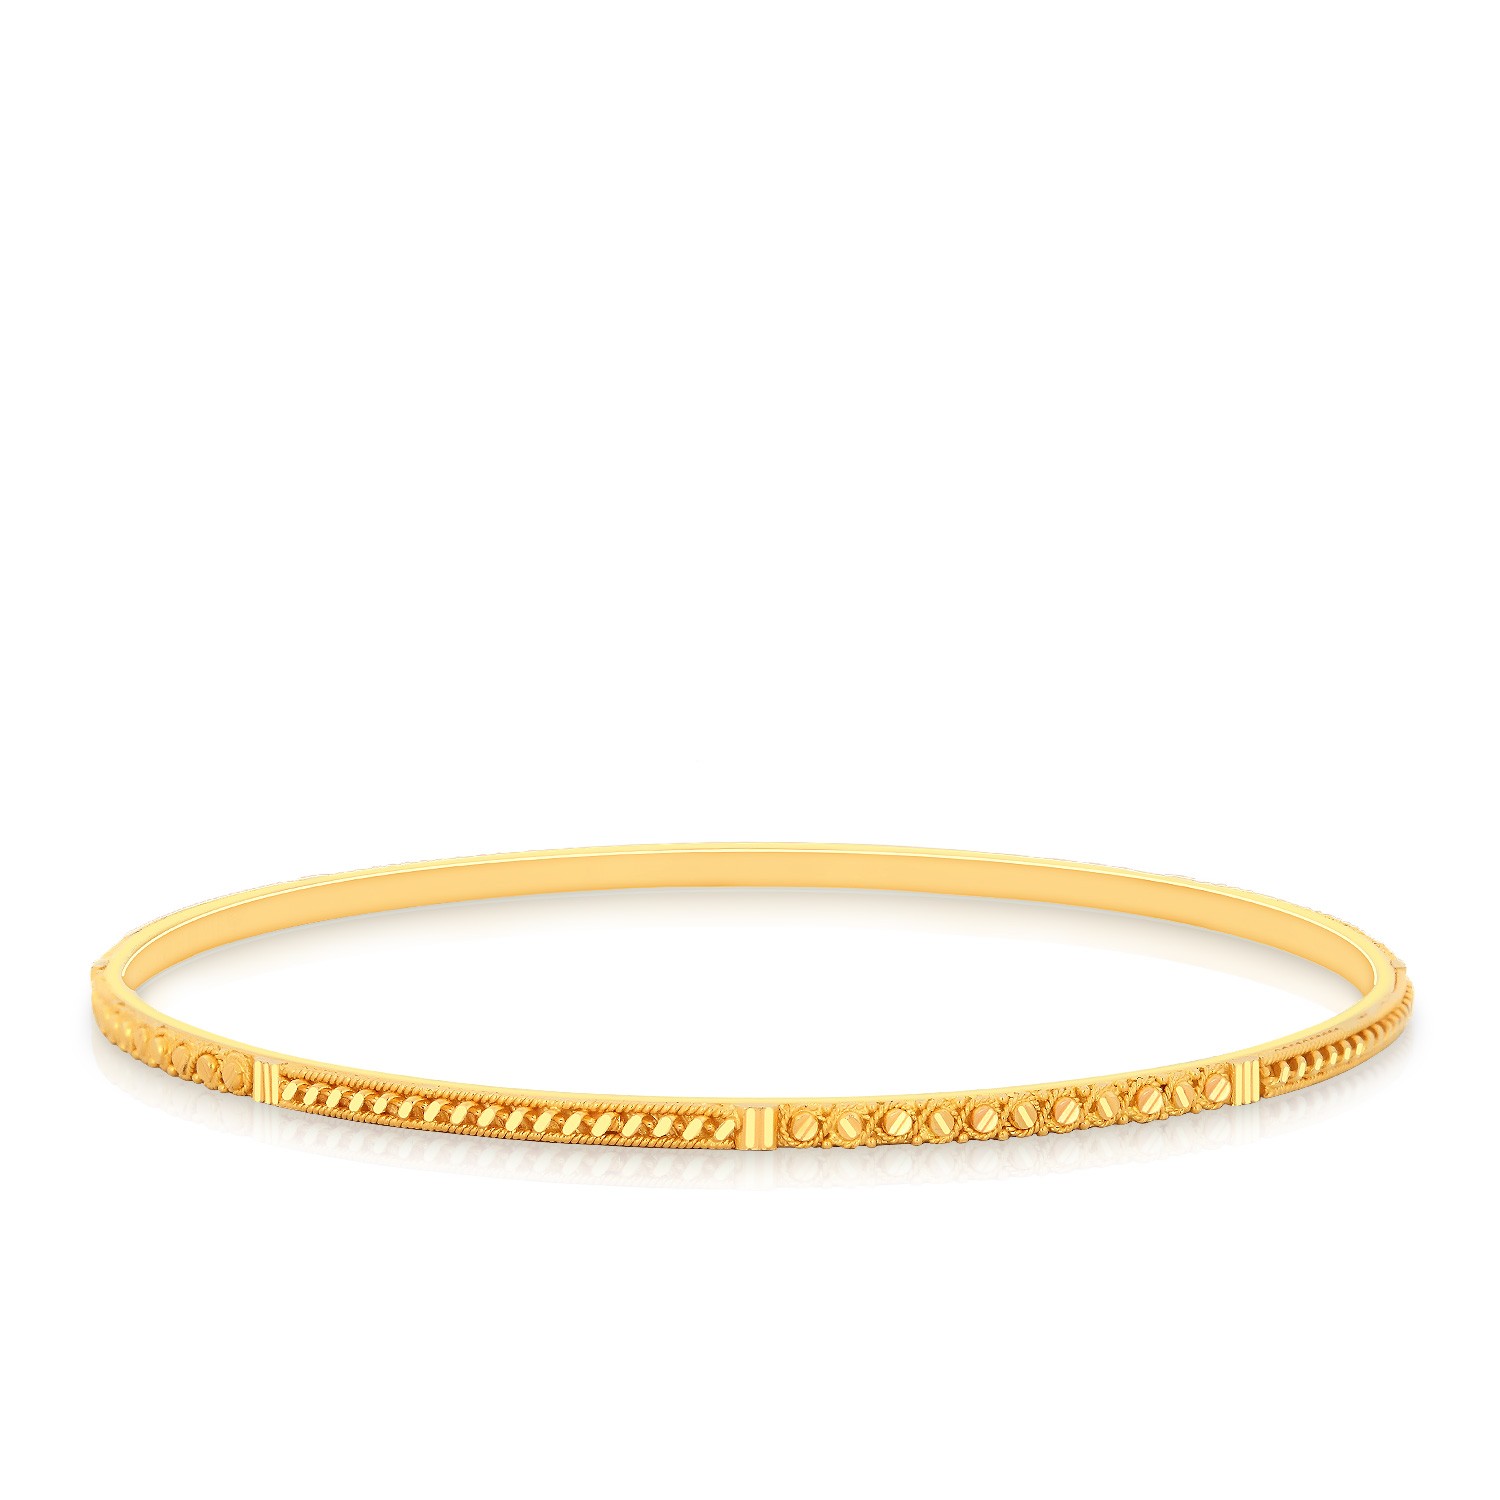 Thin Gold Bangle | Accessories | Pinterest | Gold bangles, Bangle ...